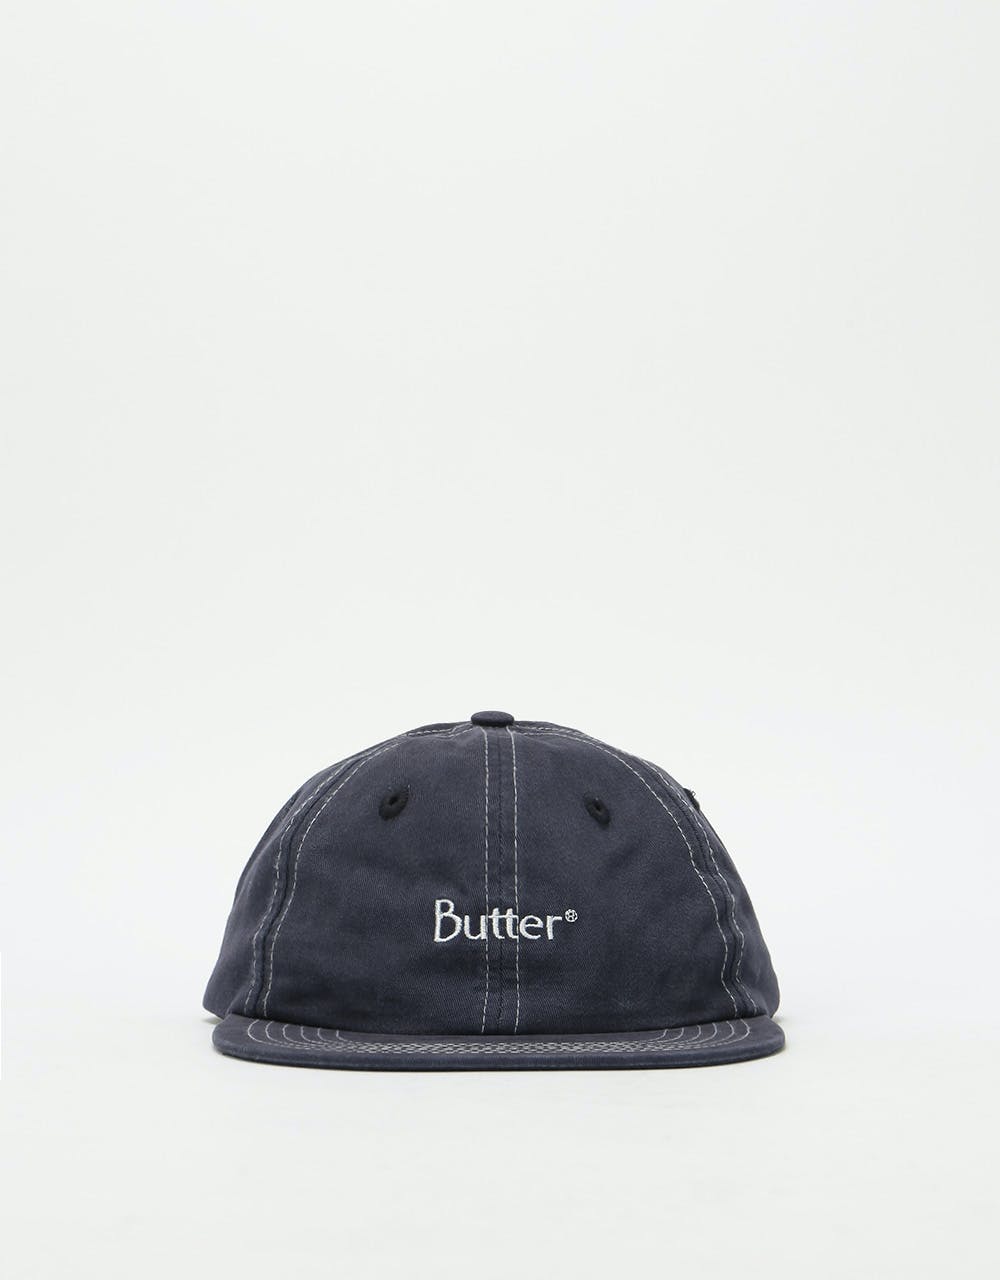 Butter Stitch 6 Panel Cap - Navy